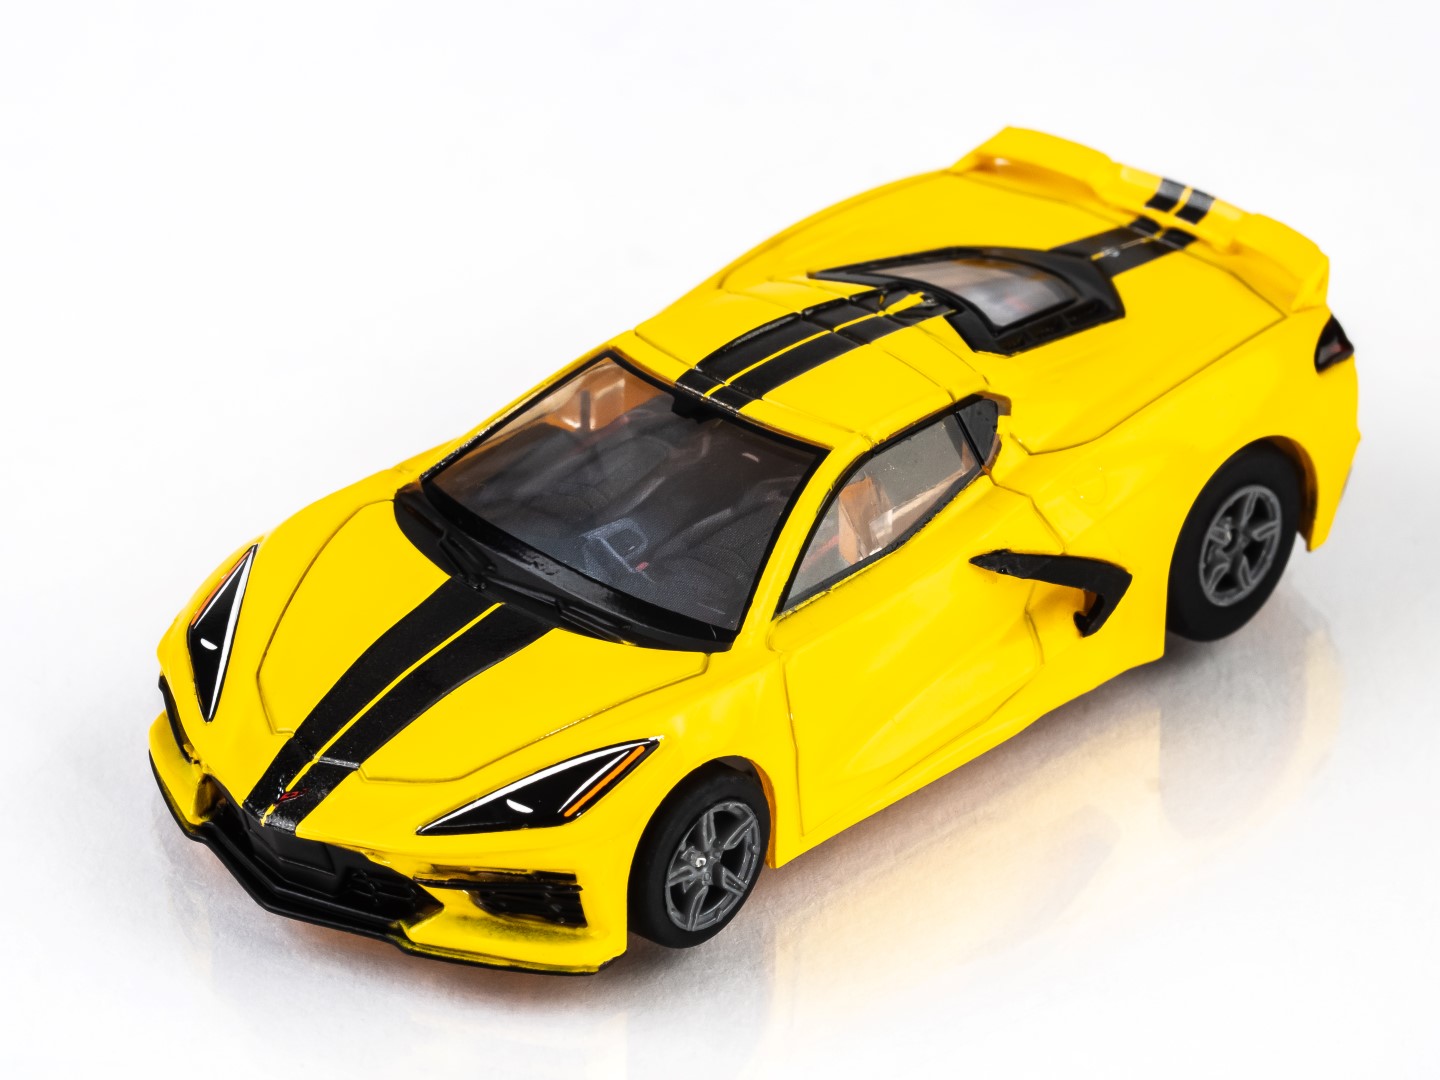 22013 Corvette C8 Yellow - Top Shot